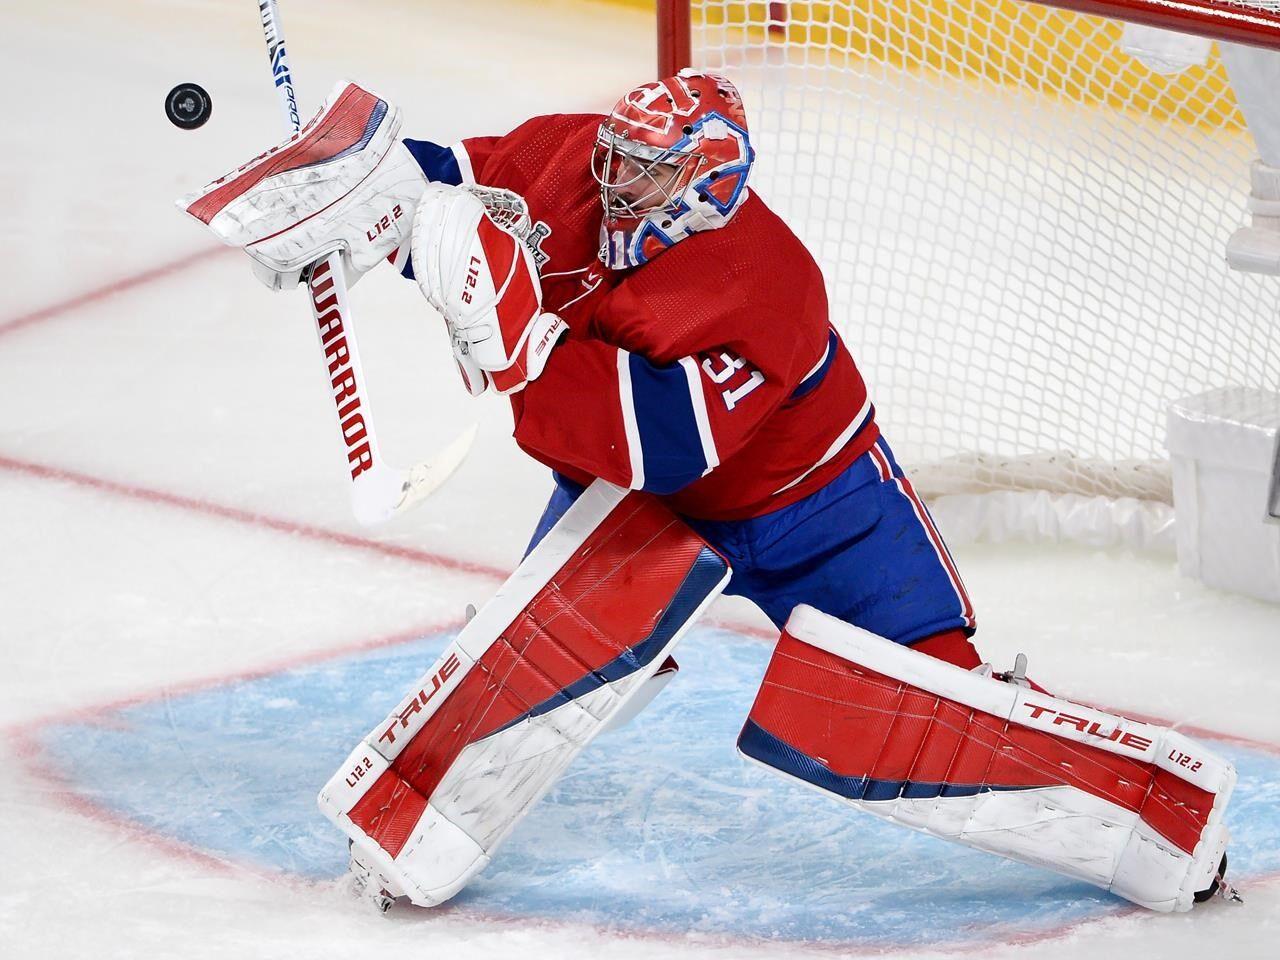 Carey Price, Canadiens goalie, entered NHL program for 'substance use